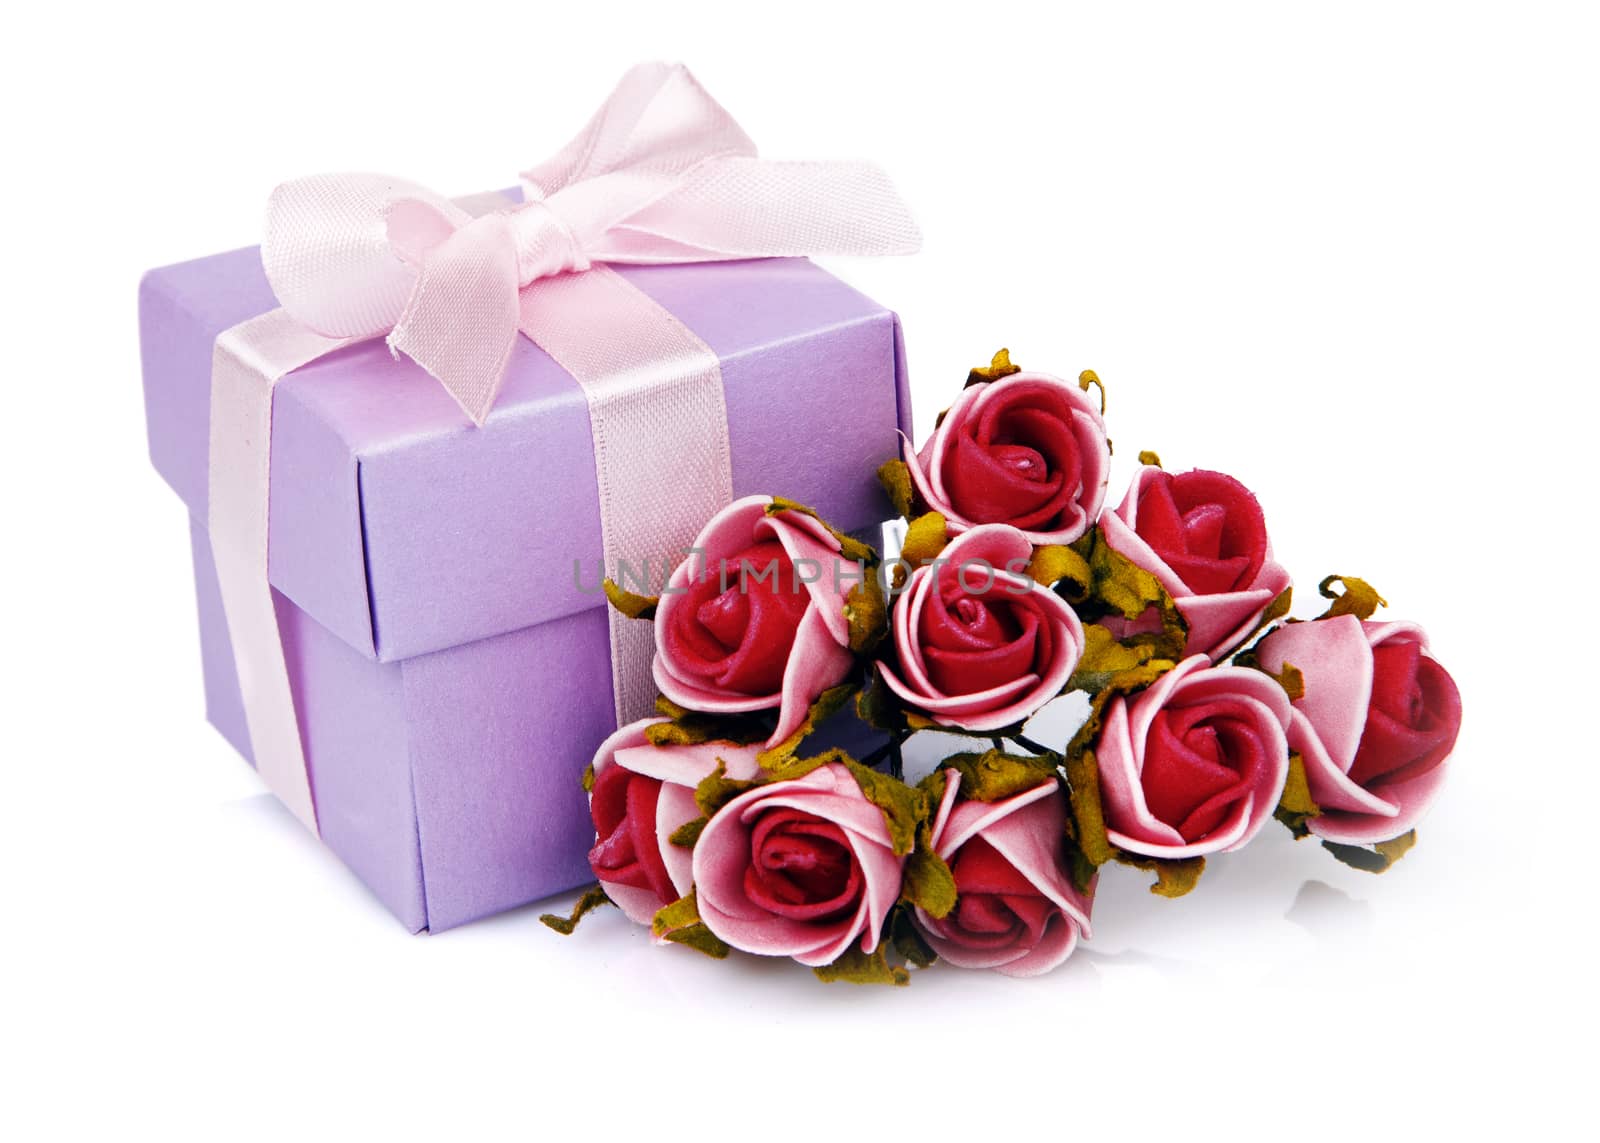 red flowers and purple gift box by serkucher